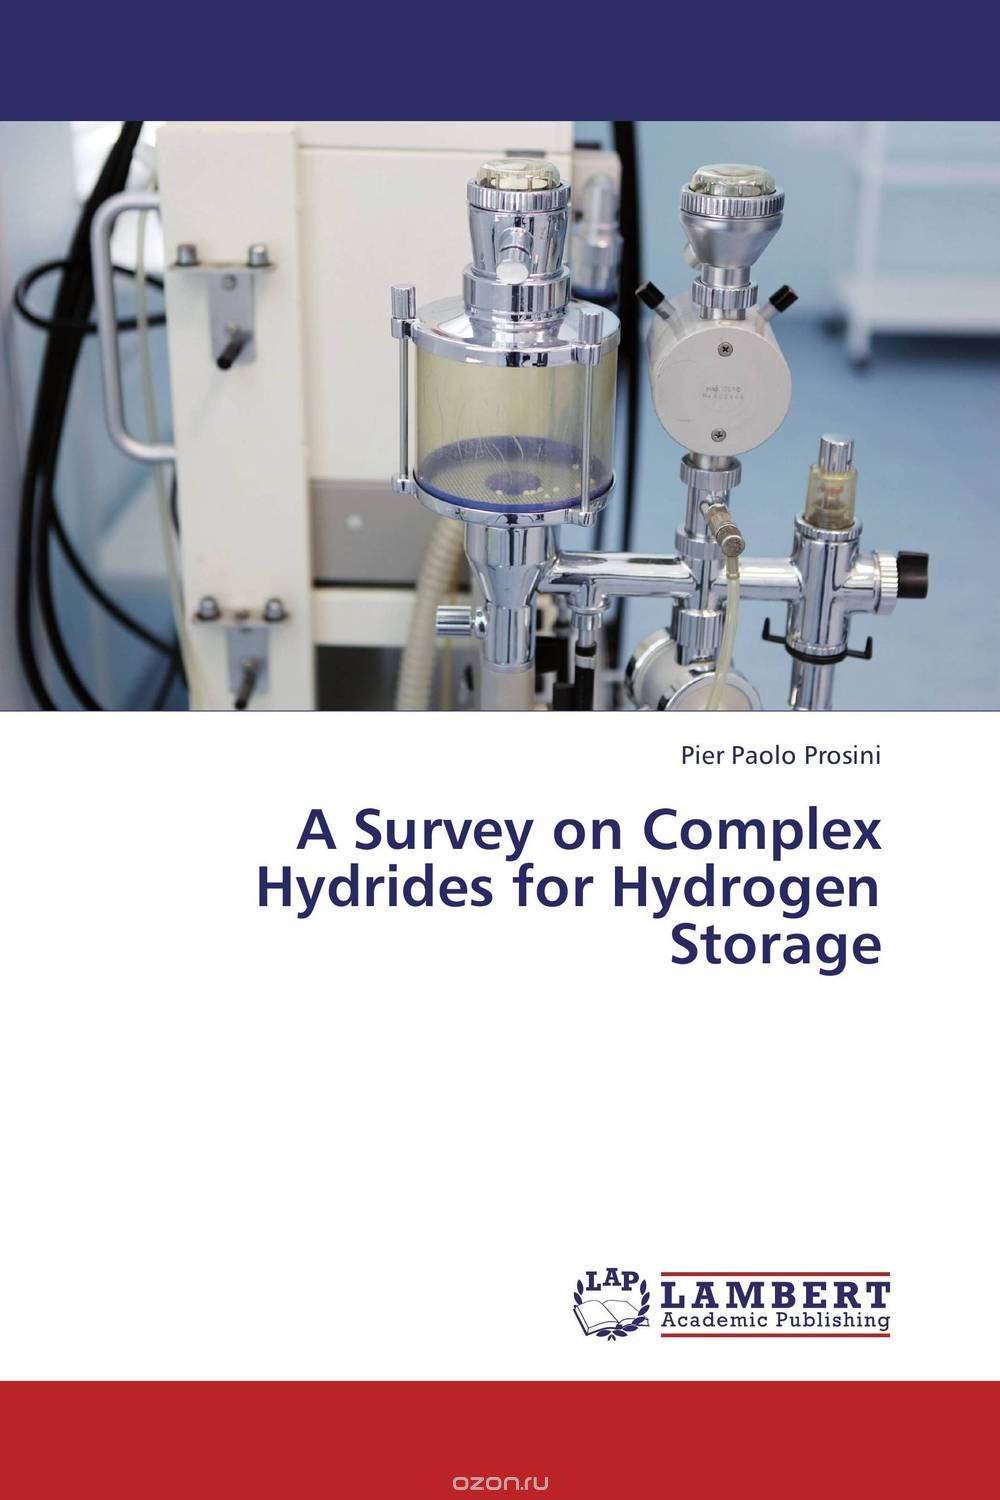 Скачать книгу "A Survey on Complex Hydrides for Hydrogen Storage"